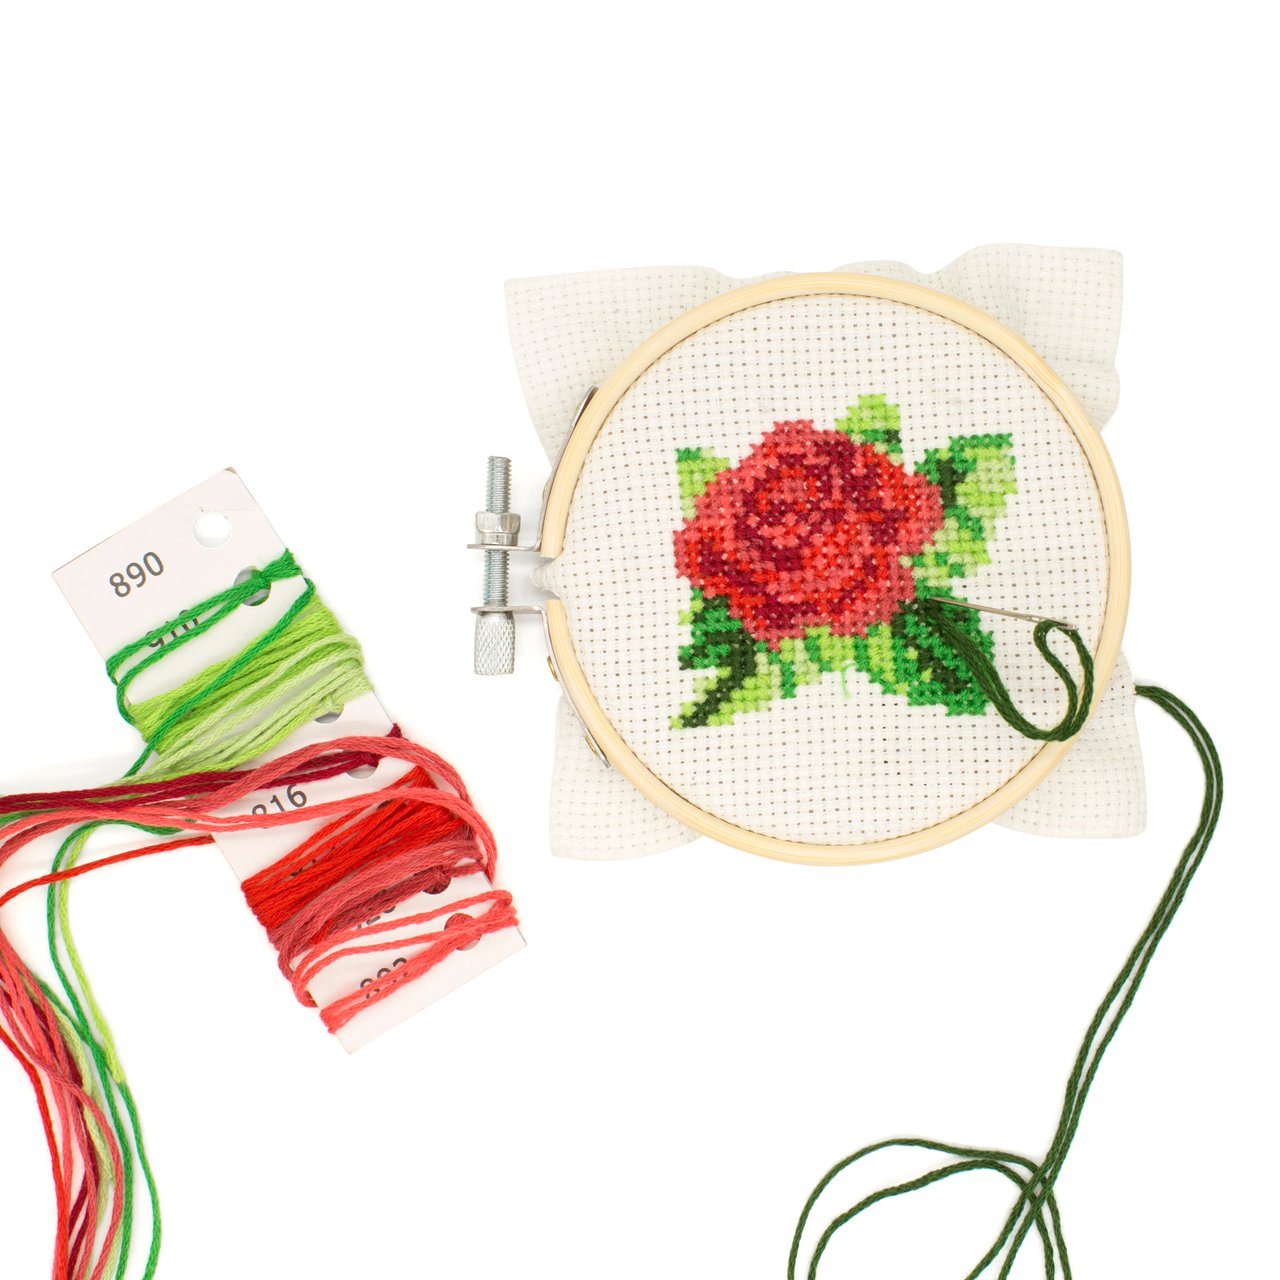 Rose - Mini Cross Stitch Embroidery Kit